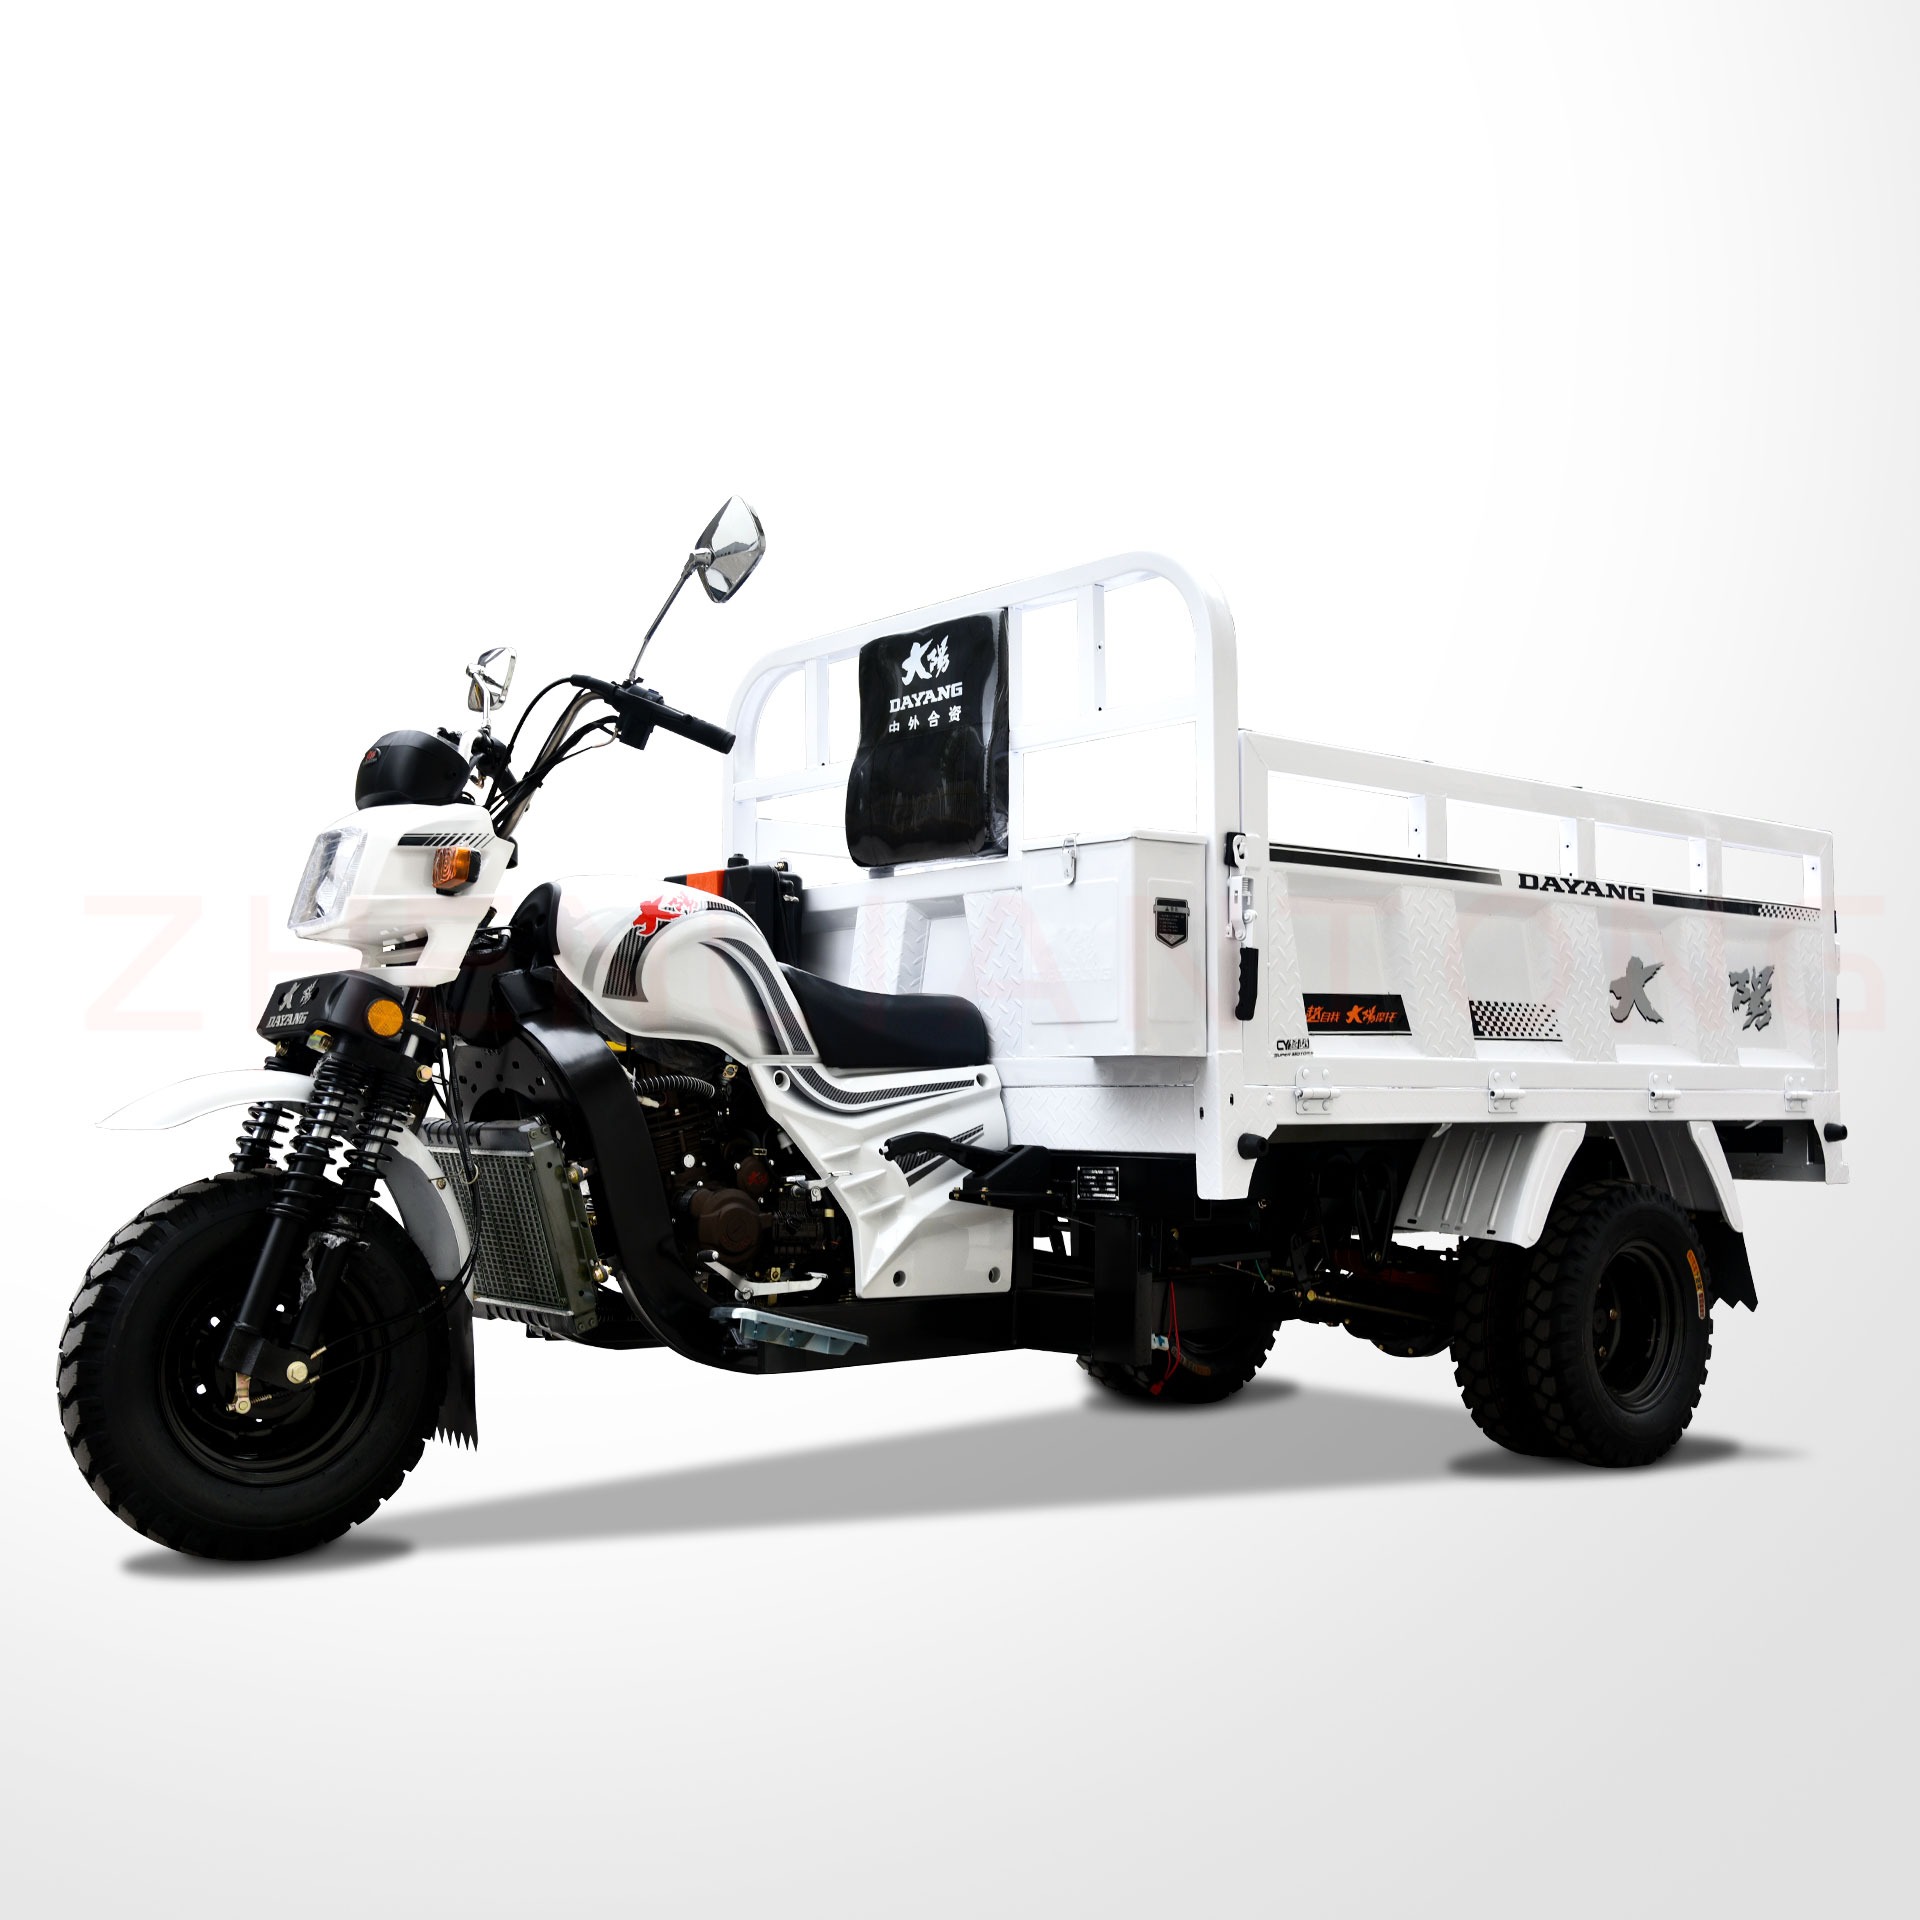 Hot Selling Heavy Loading Tricycle Cargo Motorized 151 - 200cc 200cc/250cc/300cc Three Wheel Motorcycle 501 - 800W Customized